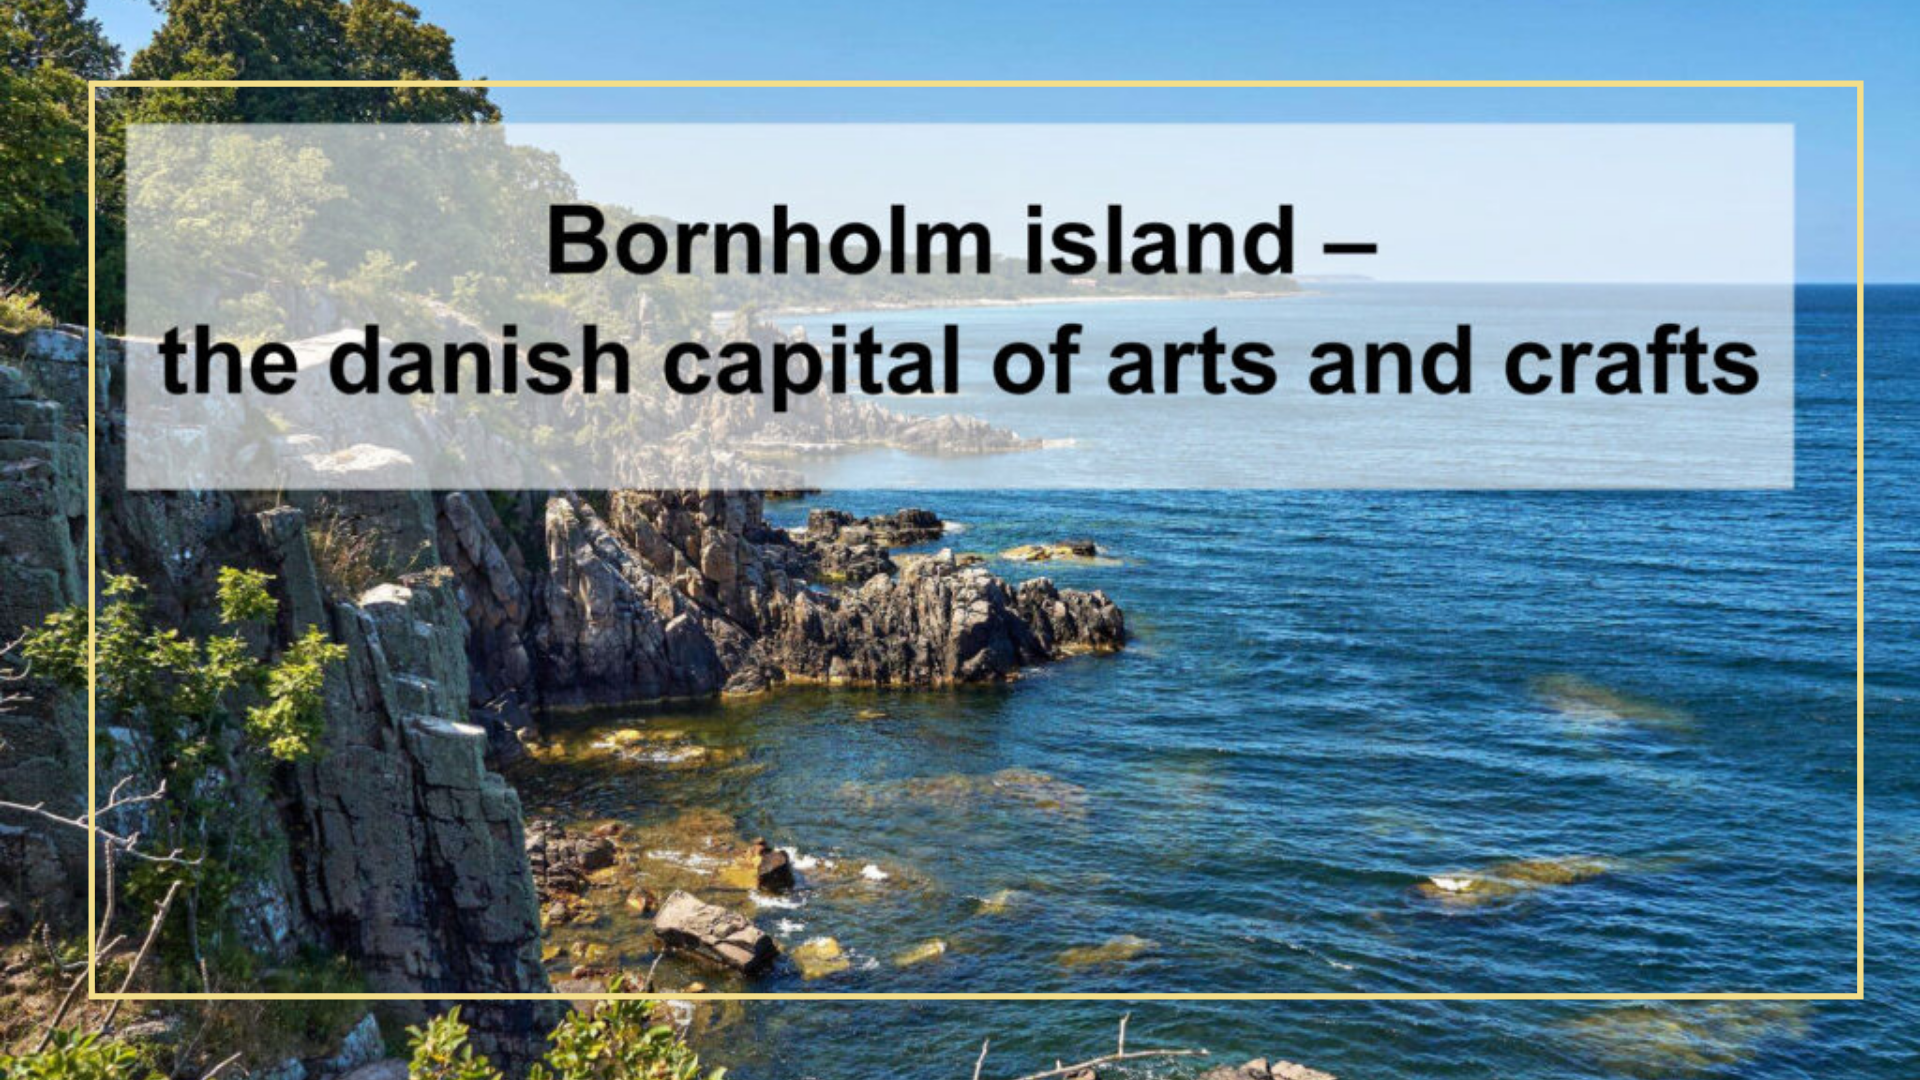 Bornholm island – the danish capital of arts and crafts